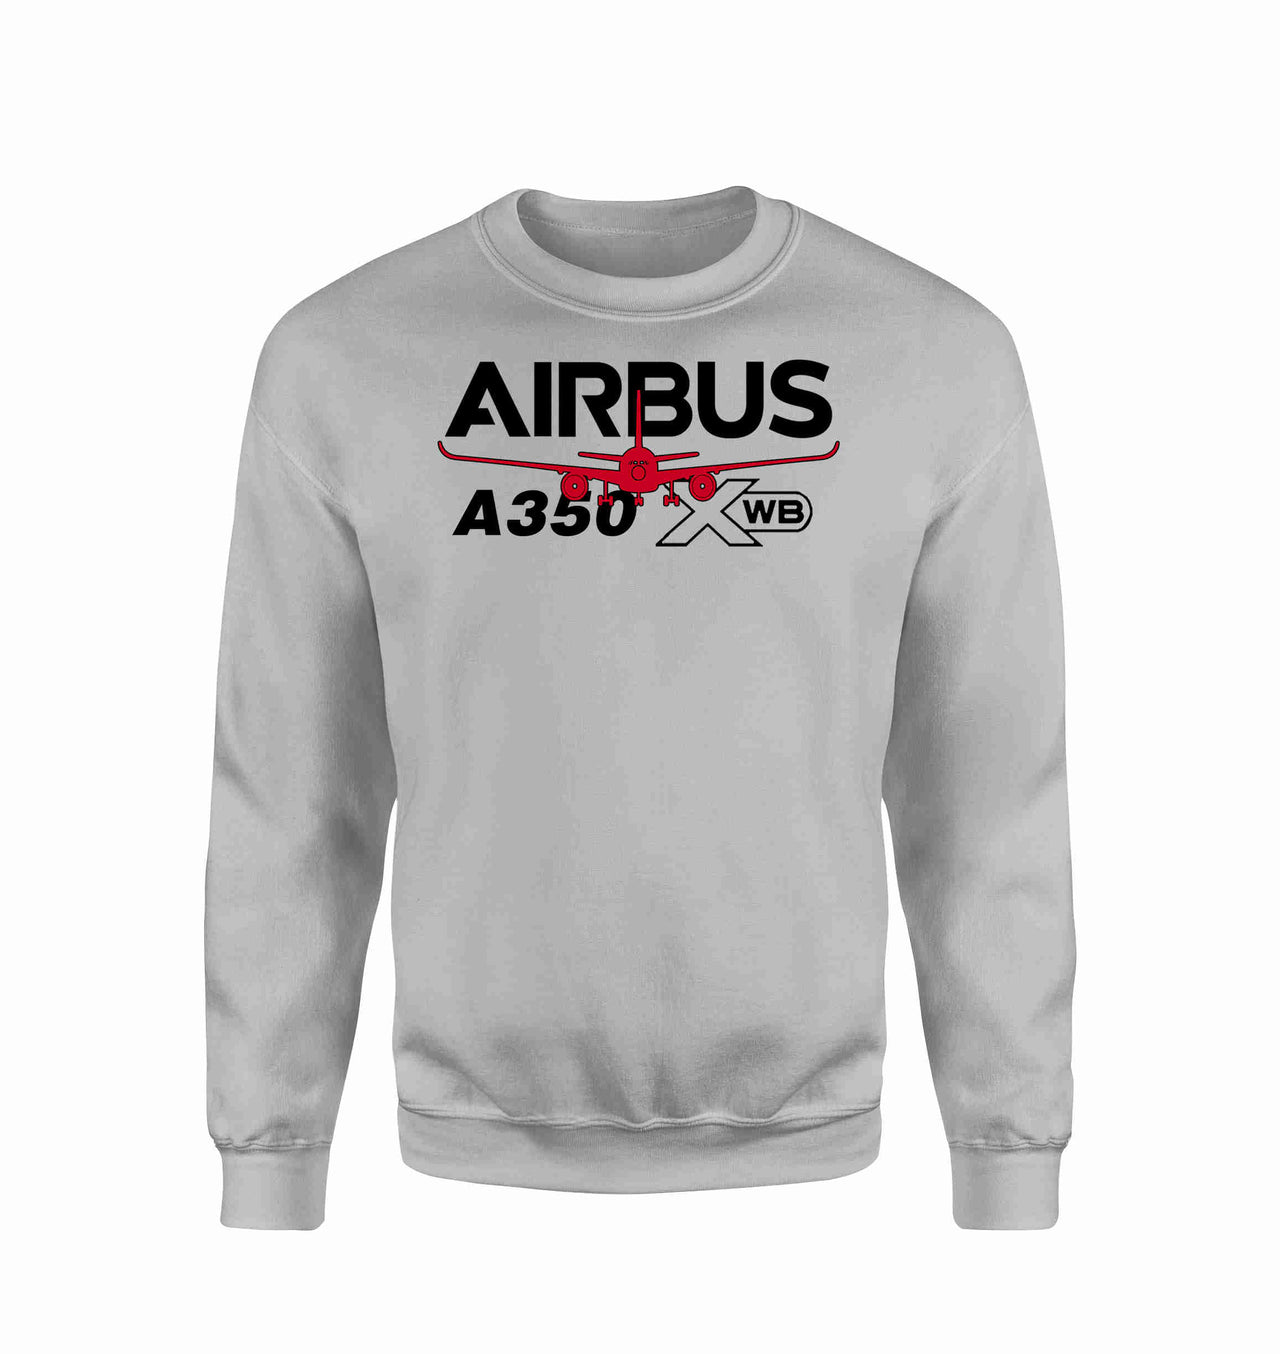 Amazing Airbus A350 XWB Designed Sweatshirts